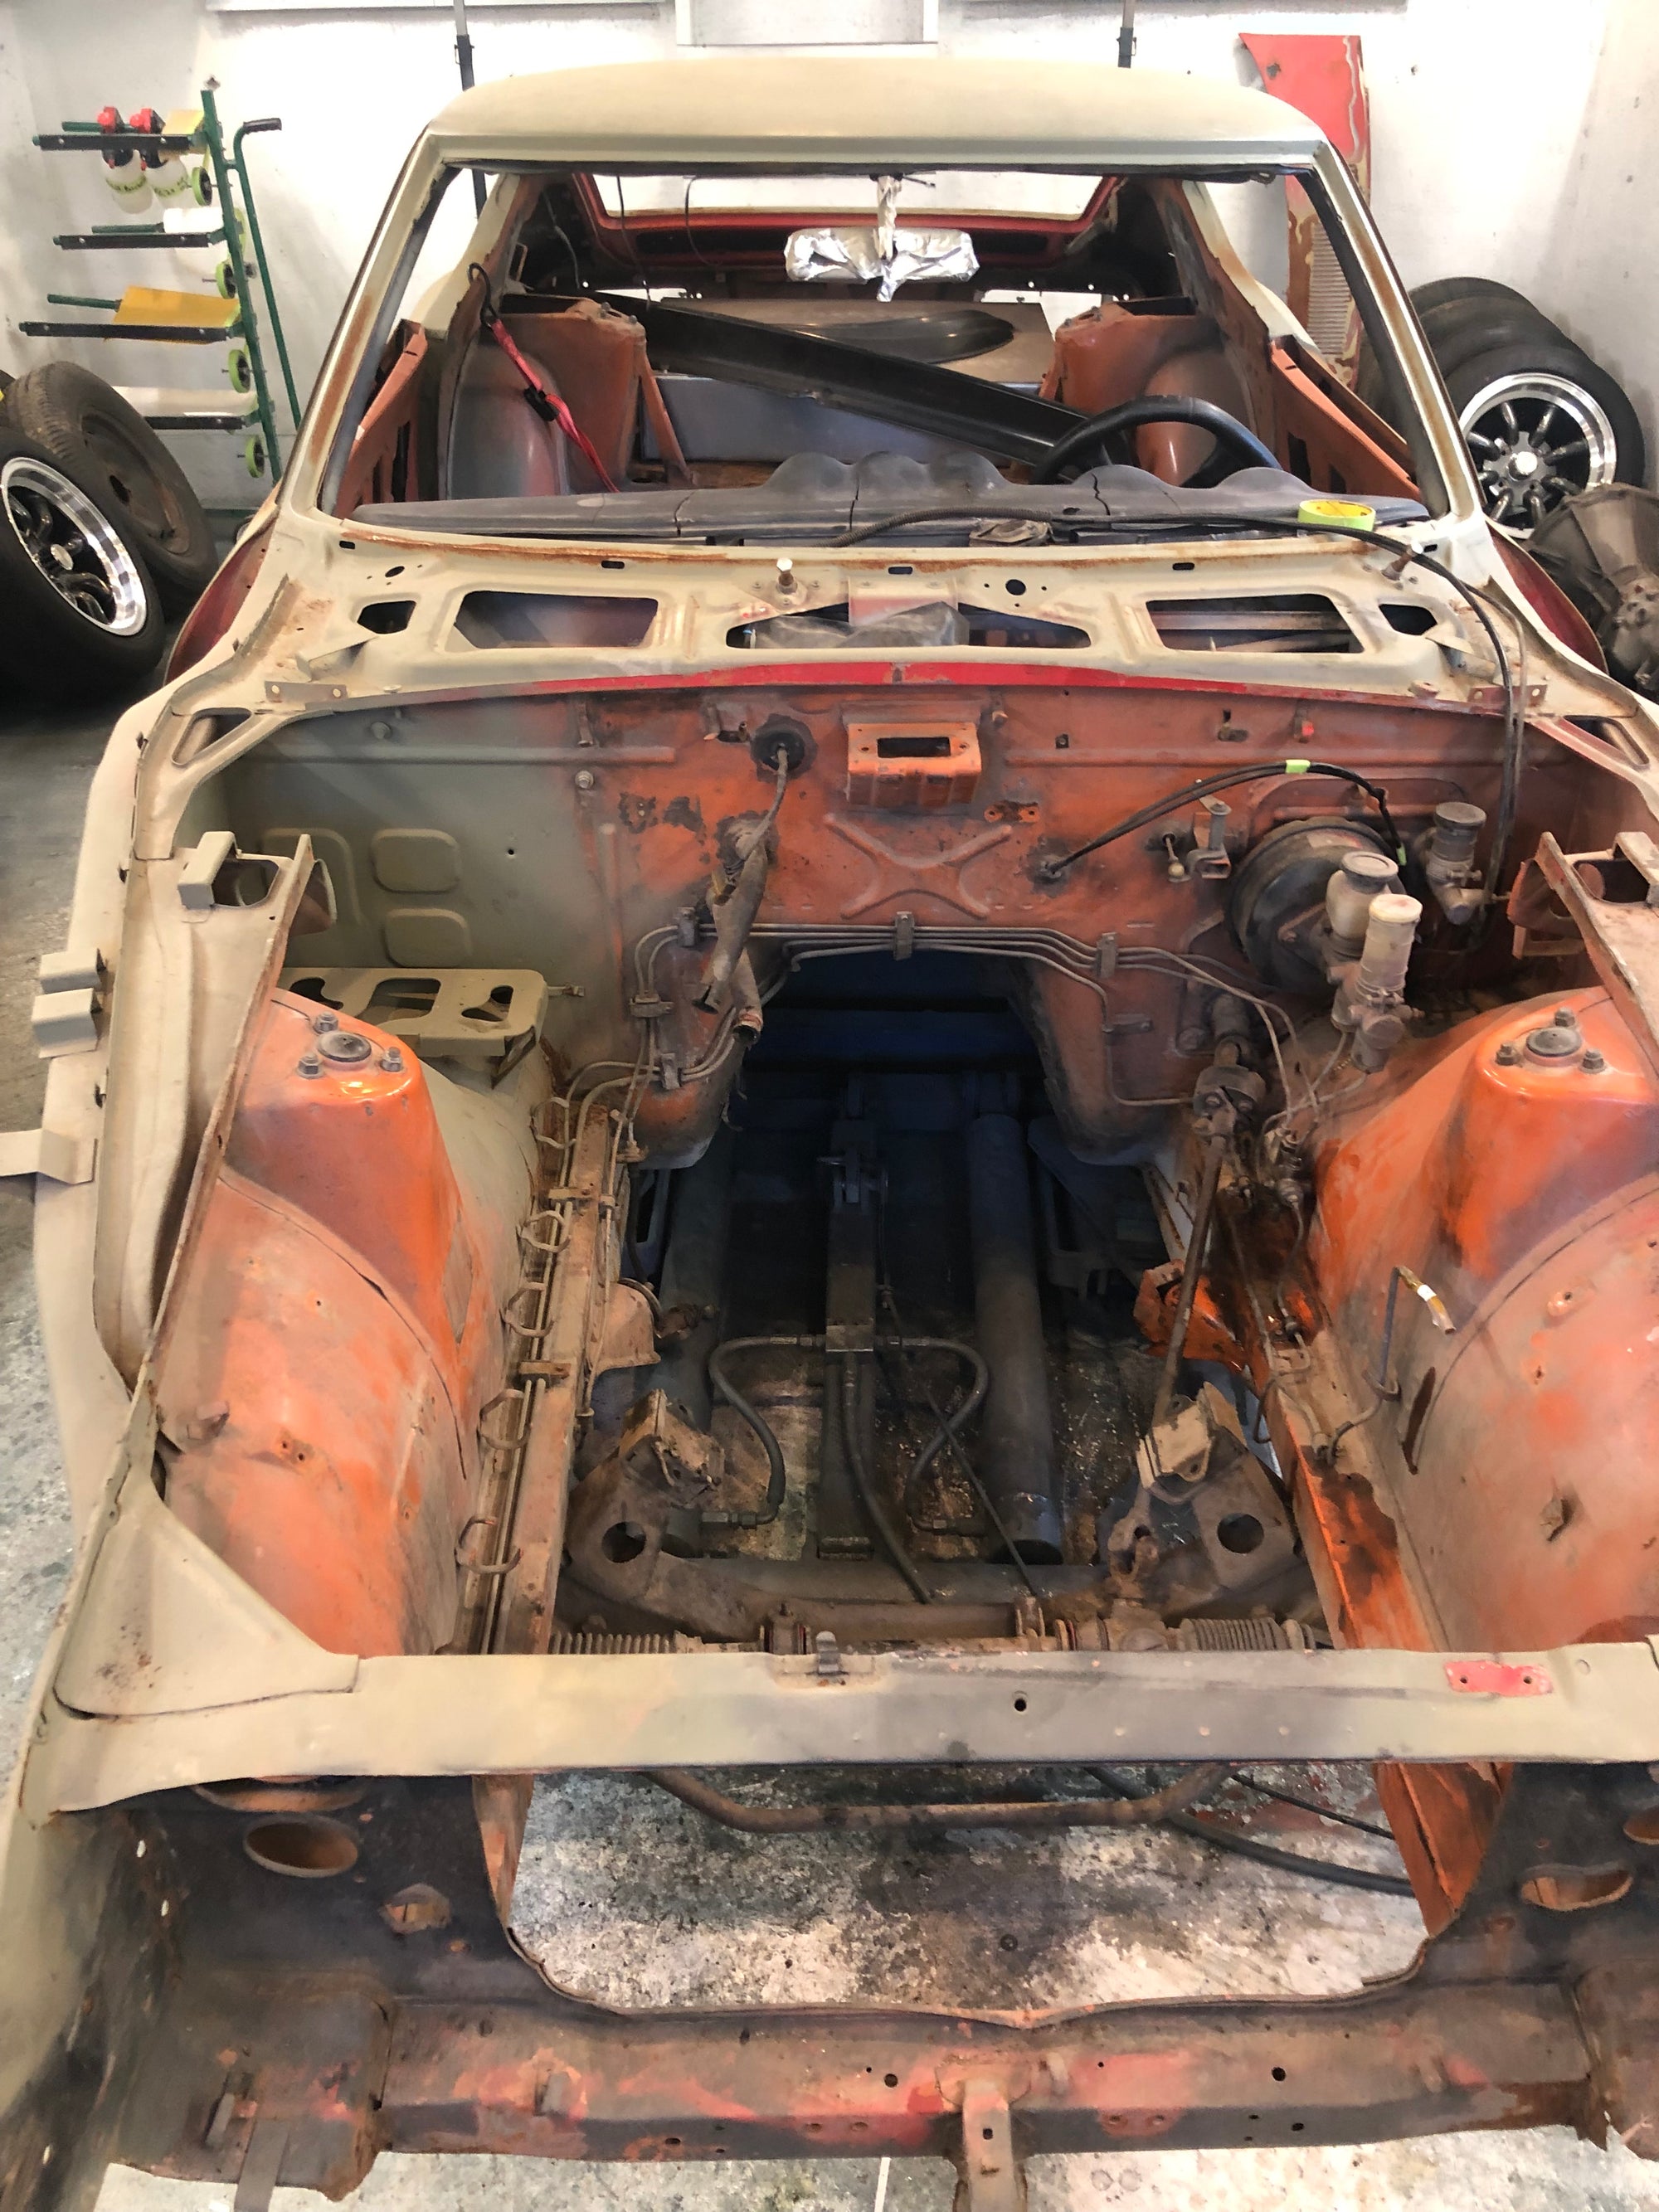 Datsun 240Z Project Blog Episode 1